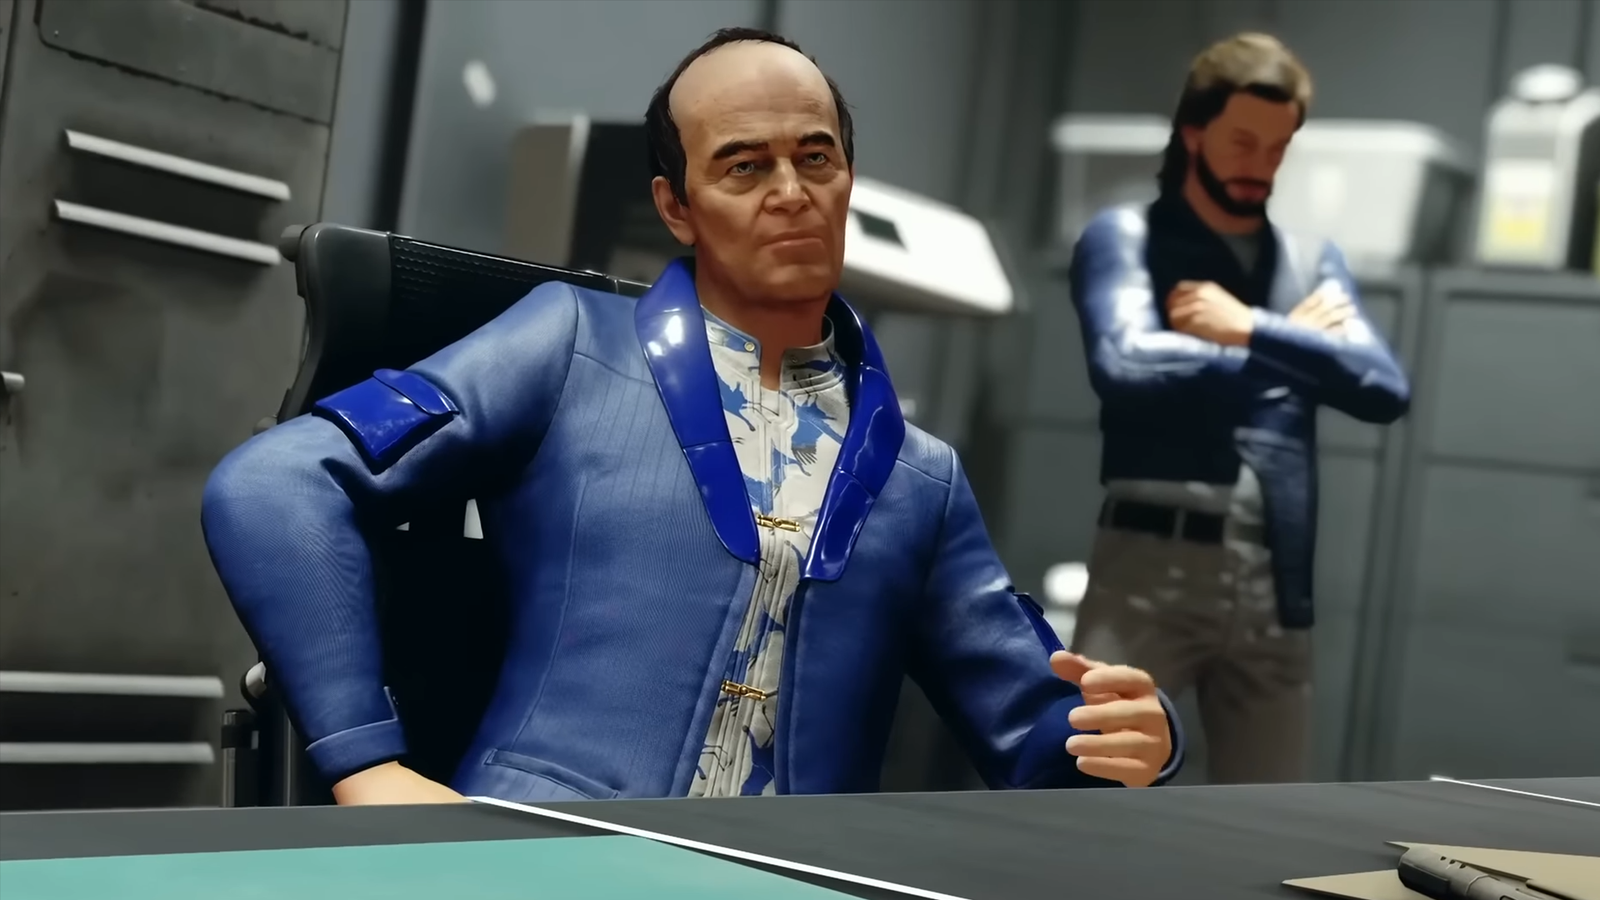 starfield ryujin faction CEO sitting on desk